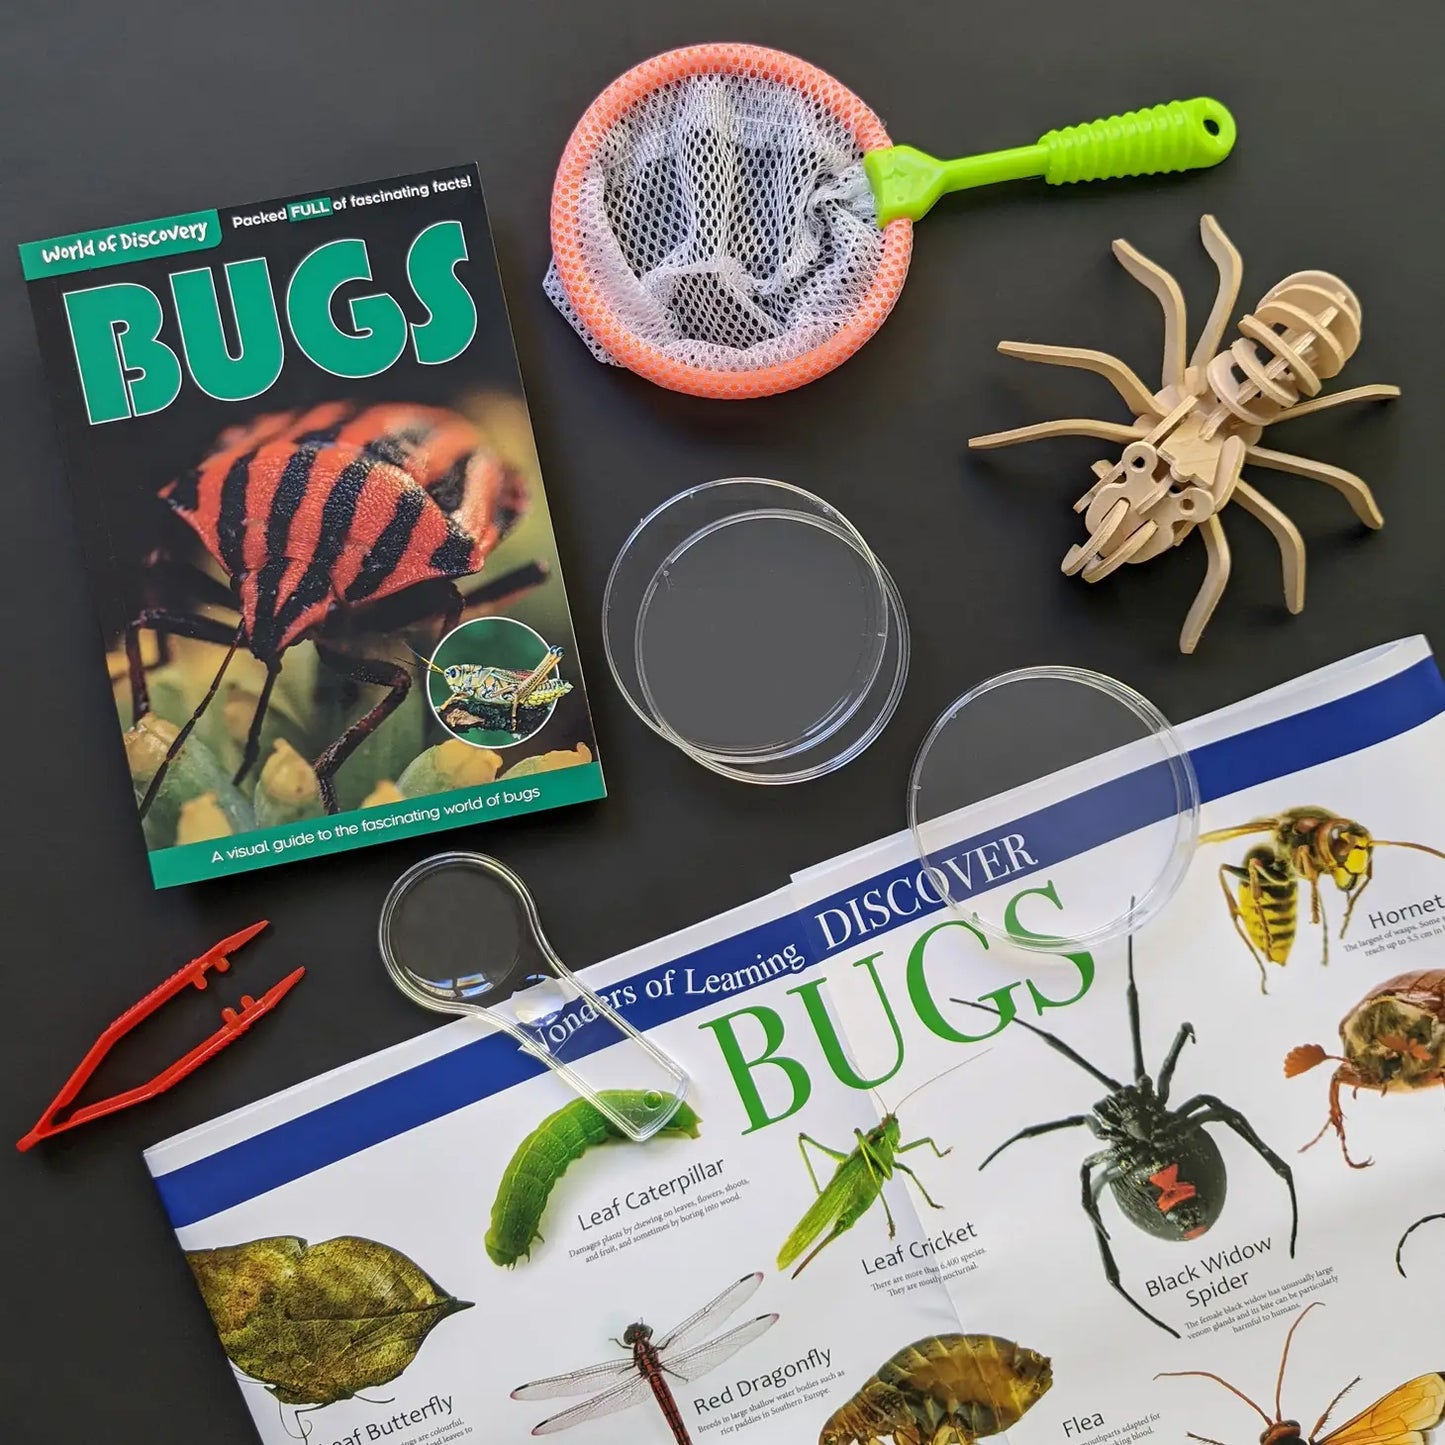 World of Discovery Bugs Educational Box Set